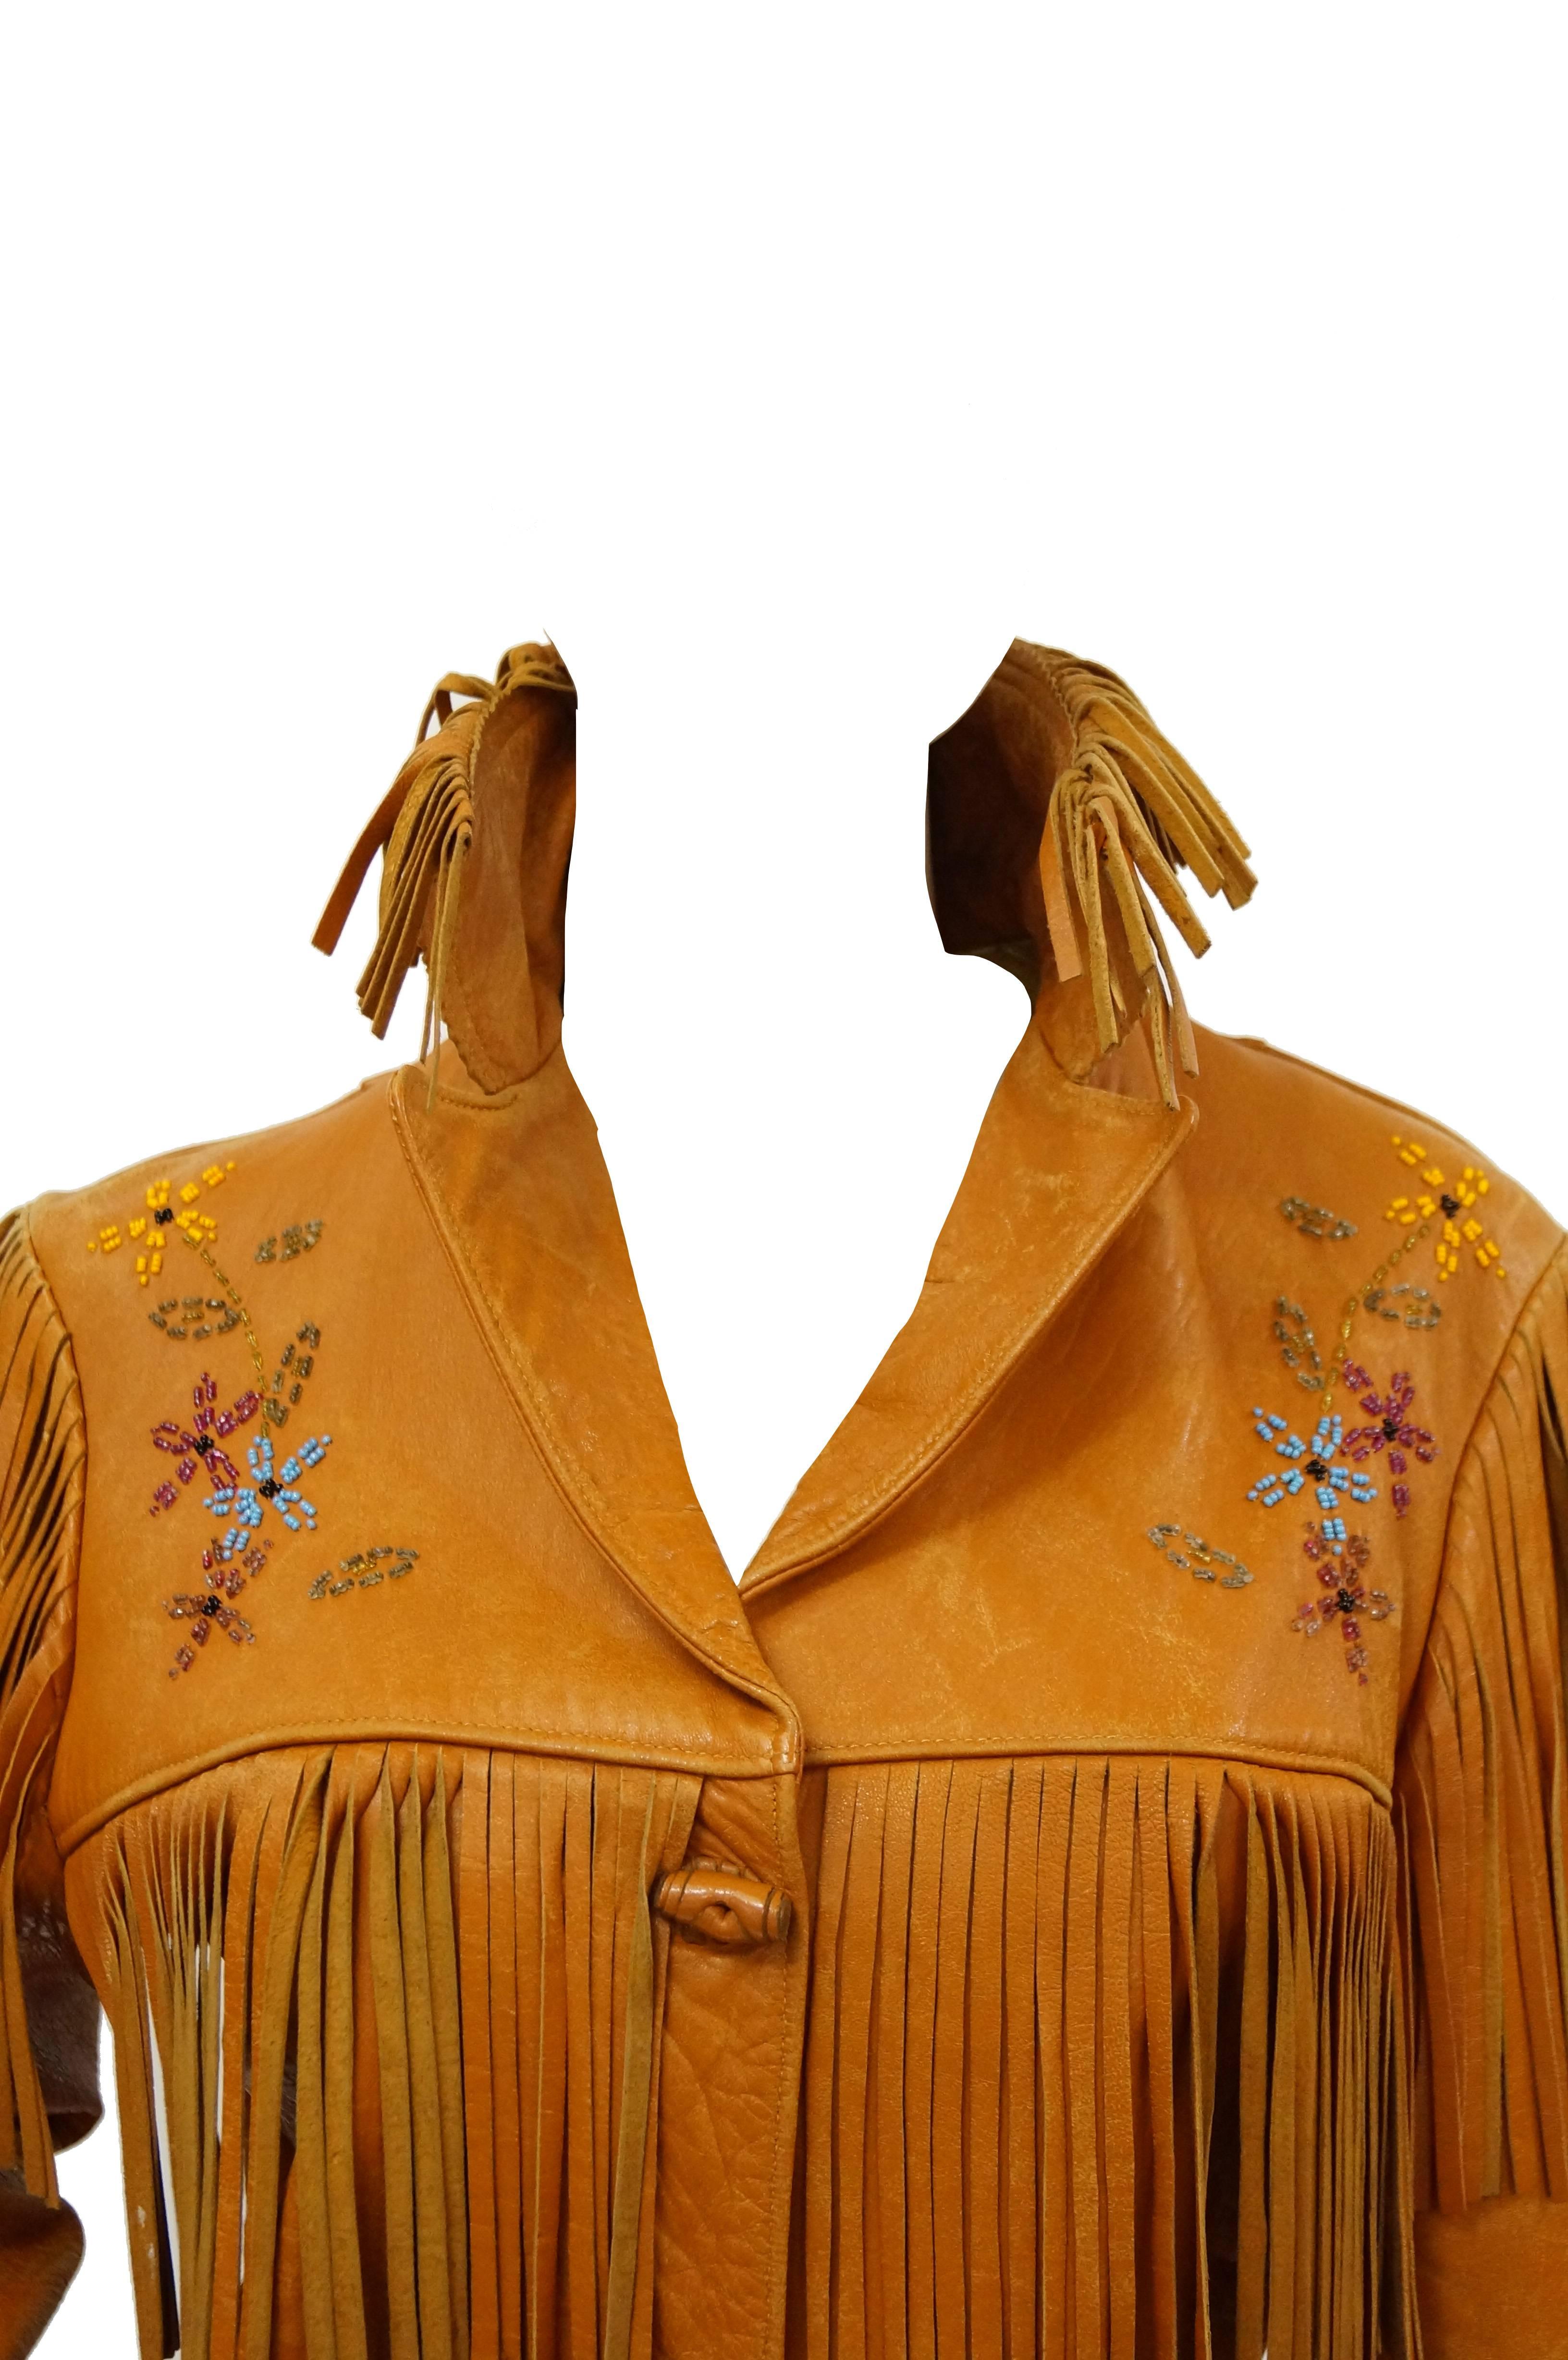 Orange Tan Leather Jacket with Fringe and Beading Detail, Early 1960s 